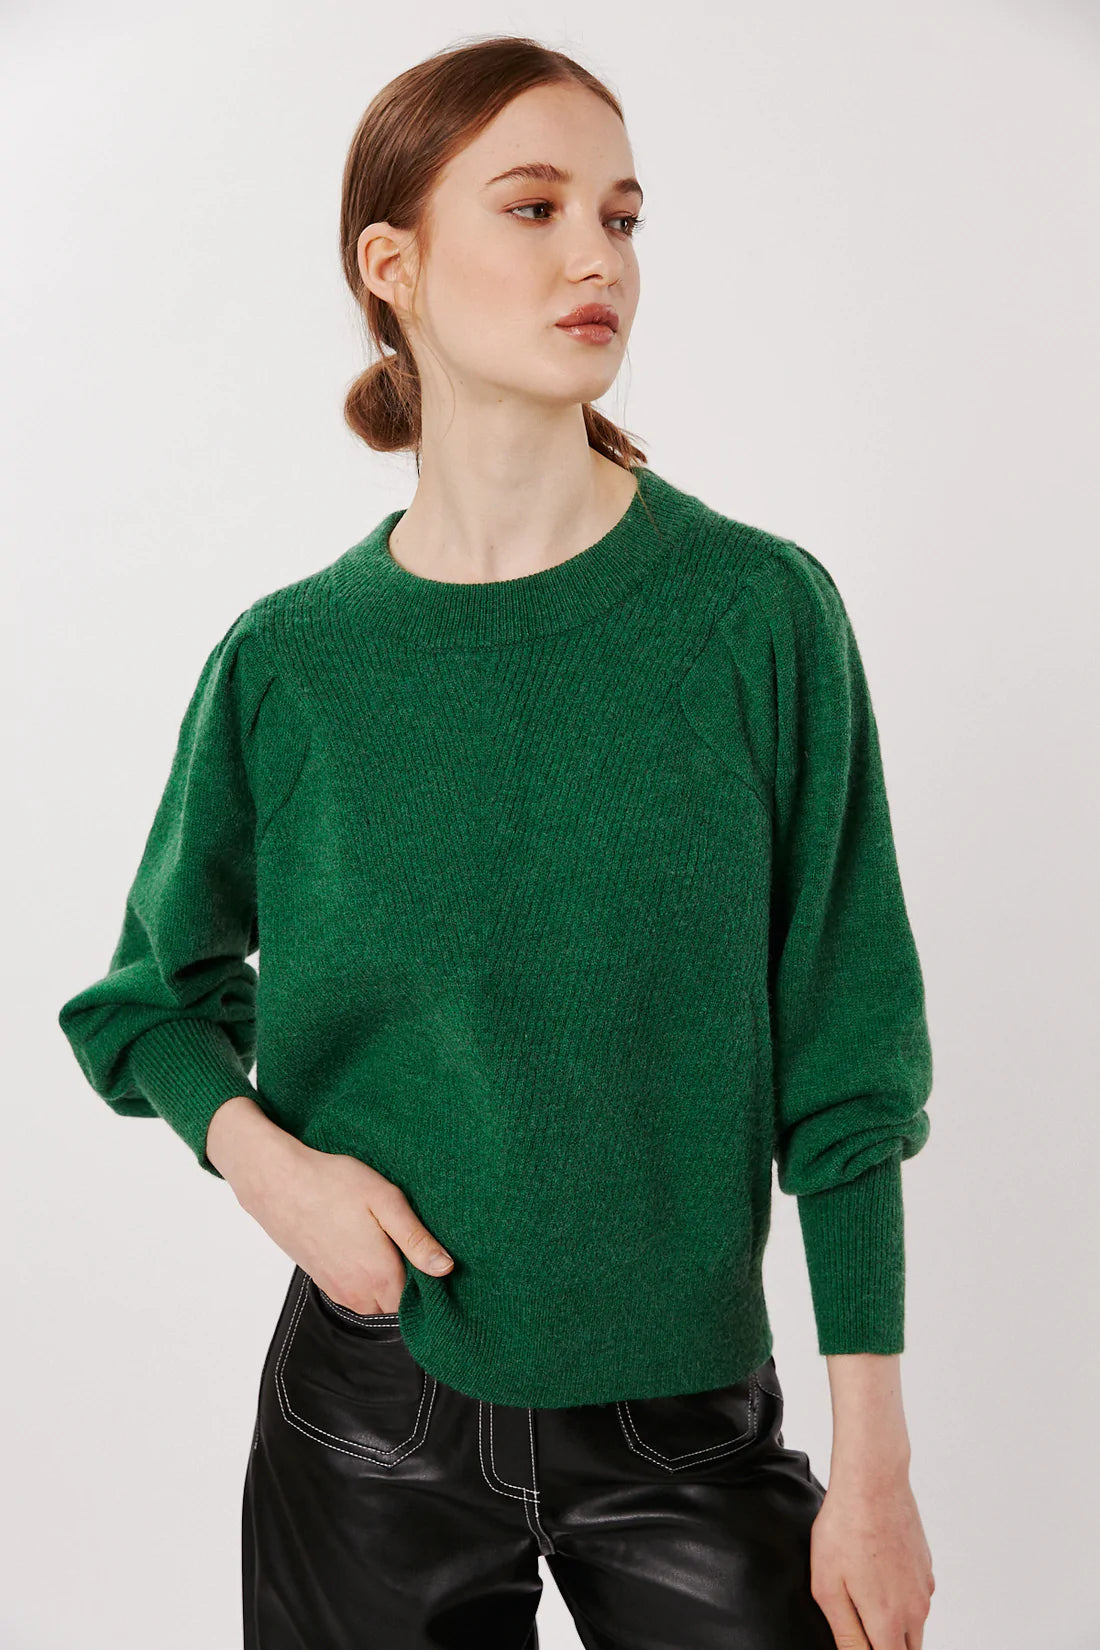 Deluc Bolzano Green Sweater